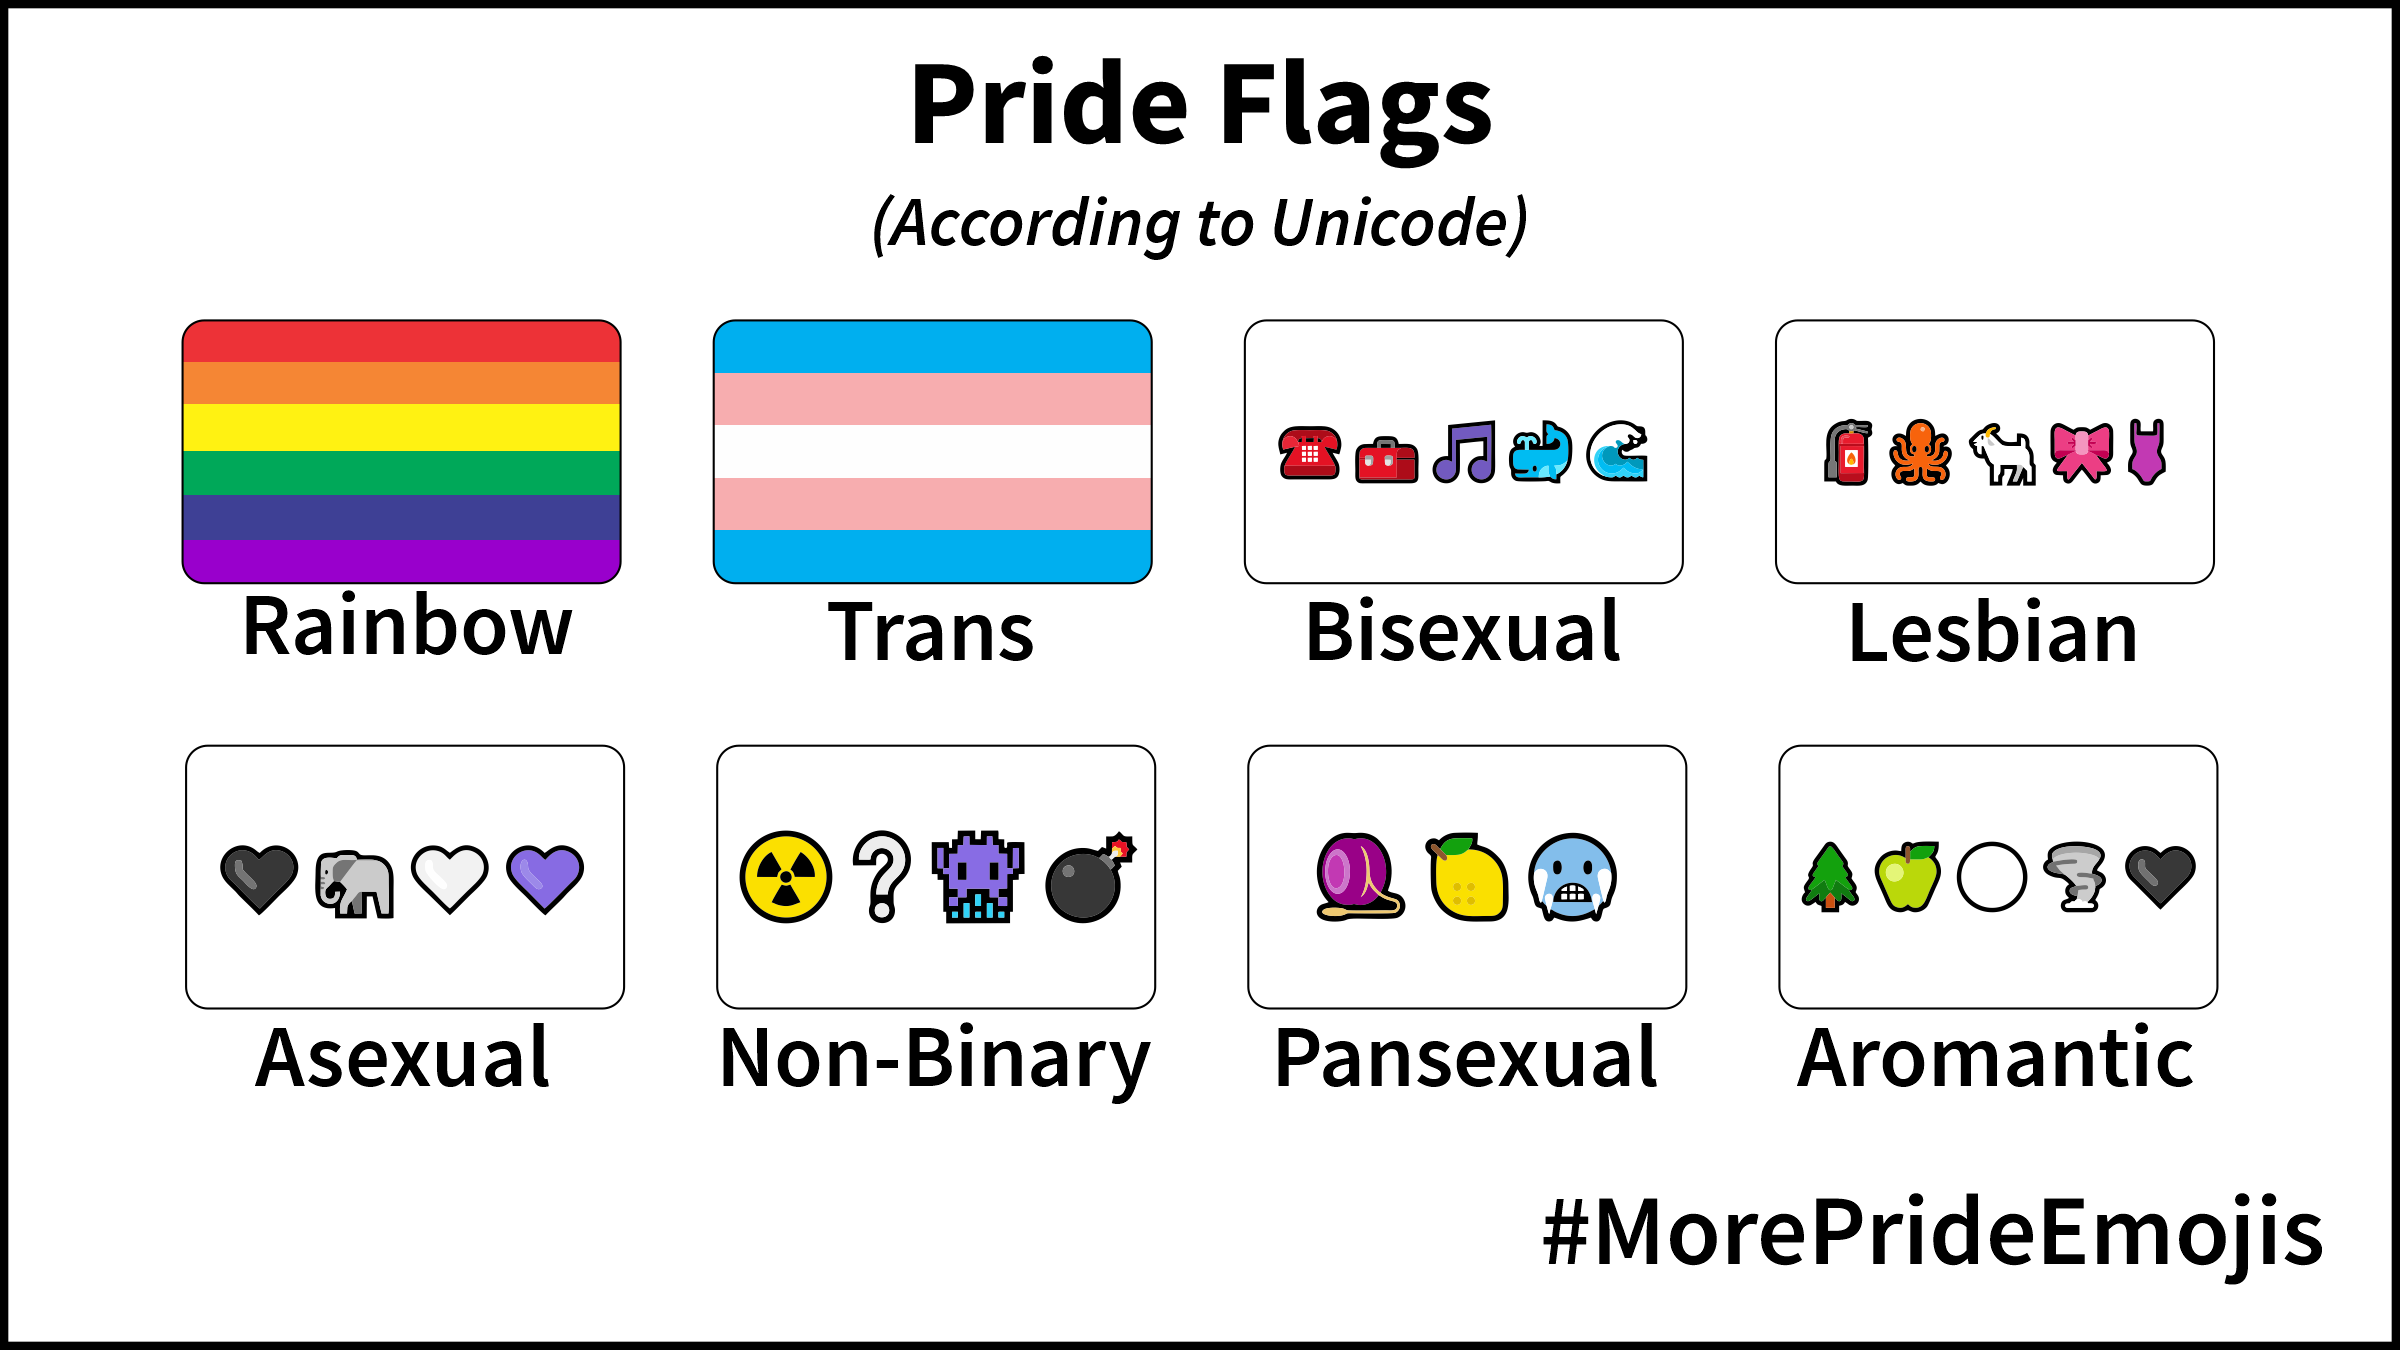 Pride Flags, according to Unicode